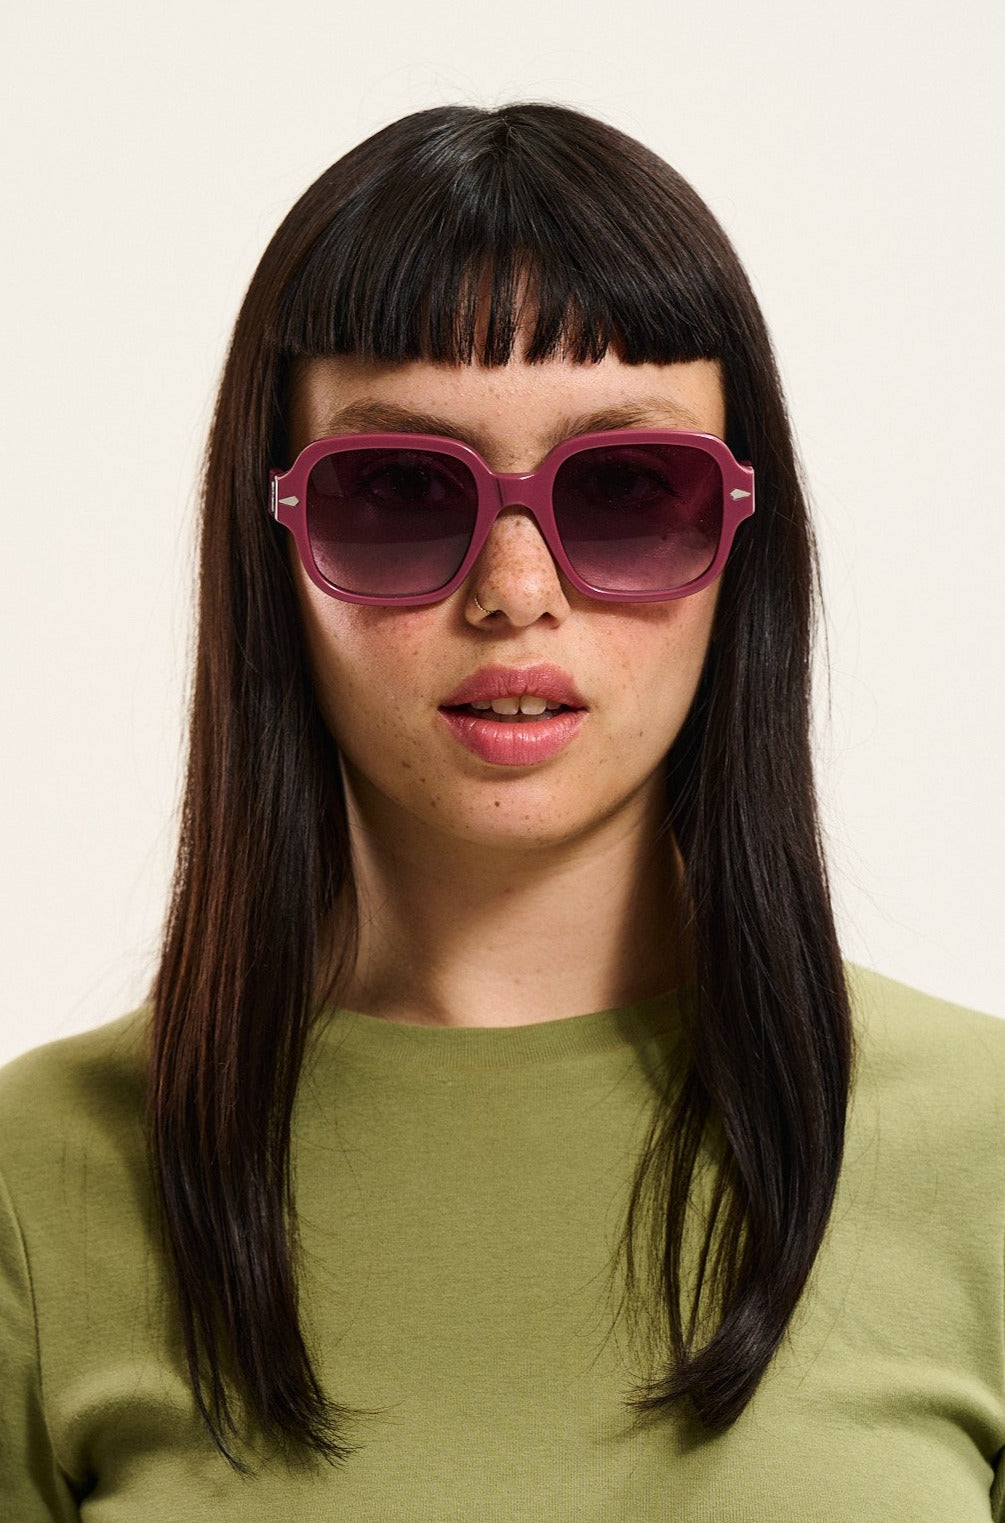 Pala X Lucy & Yak: Haiba Sunglasses - Dusky Pink